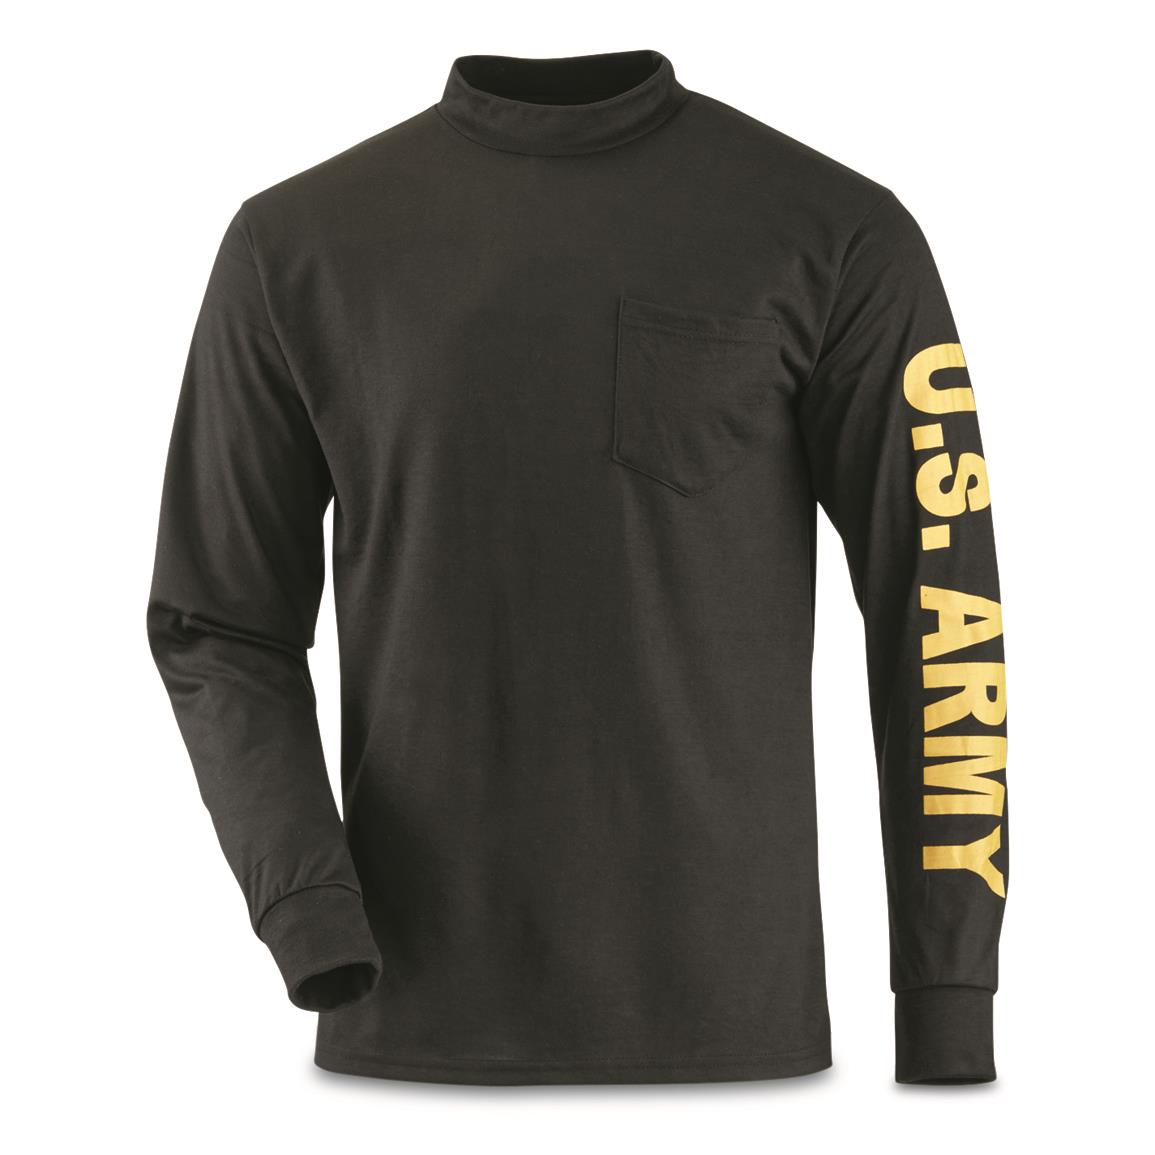 U.S. Army Surplus Long Sleeve Pocket Shirt, New, Black